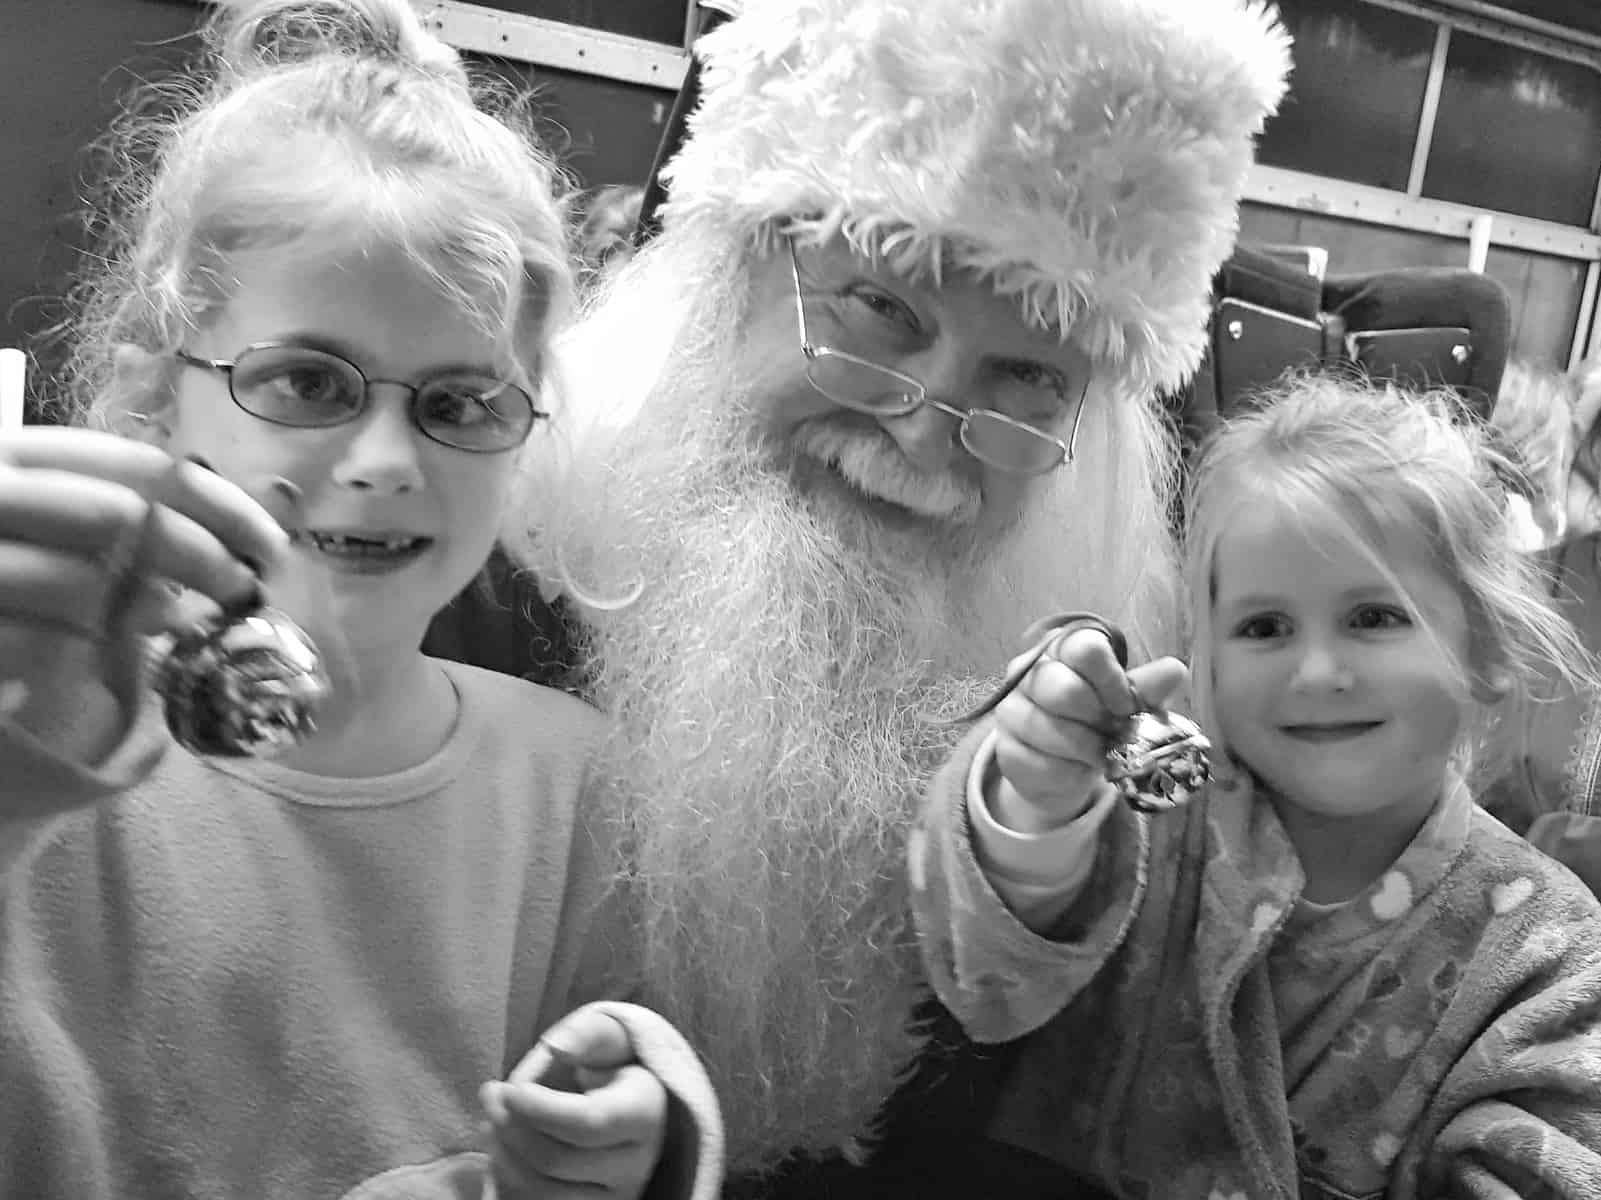 Polar Express Telford Christmas Experience Review